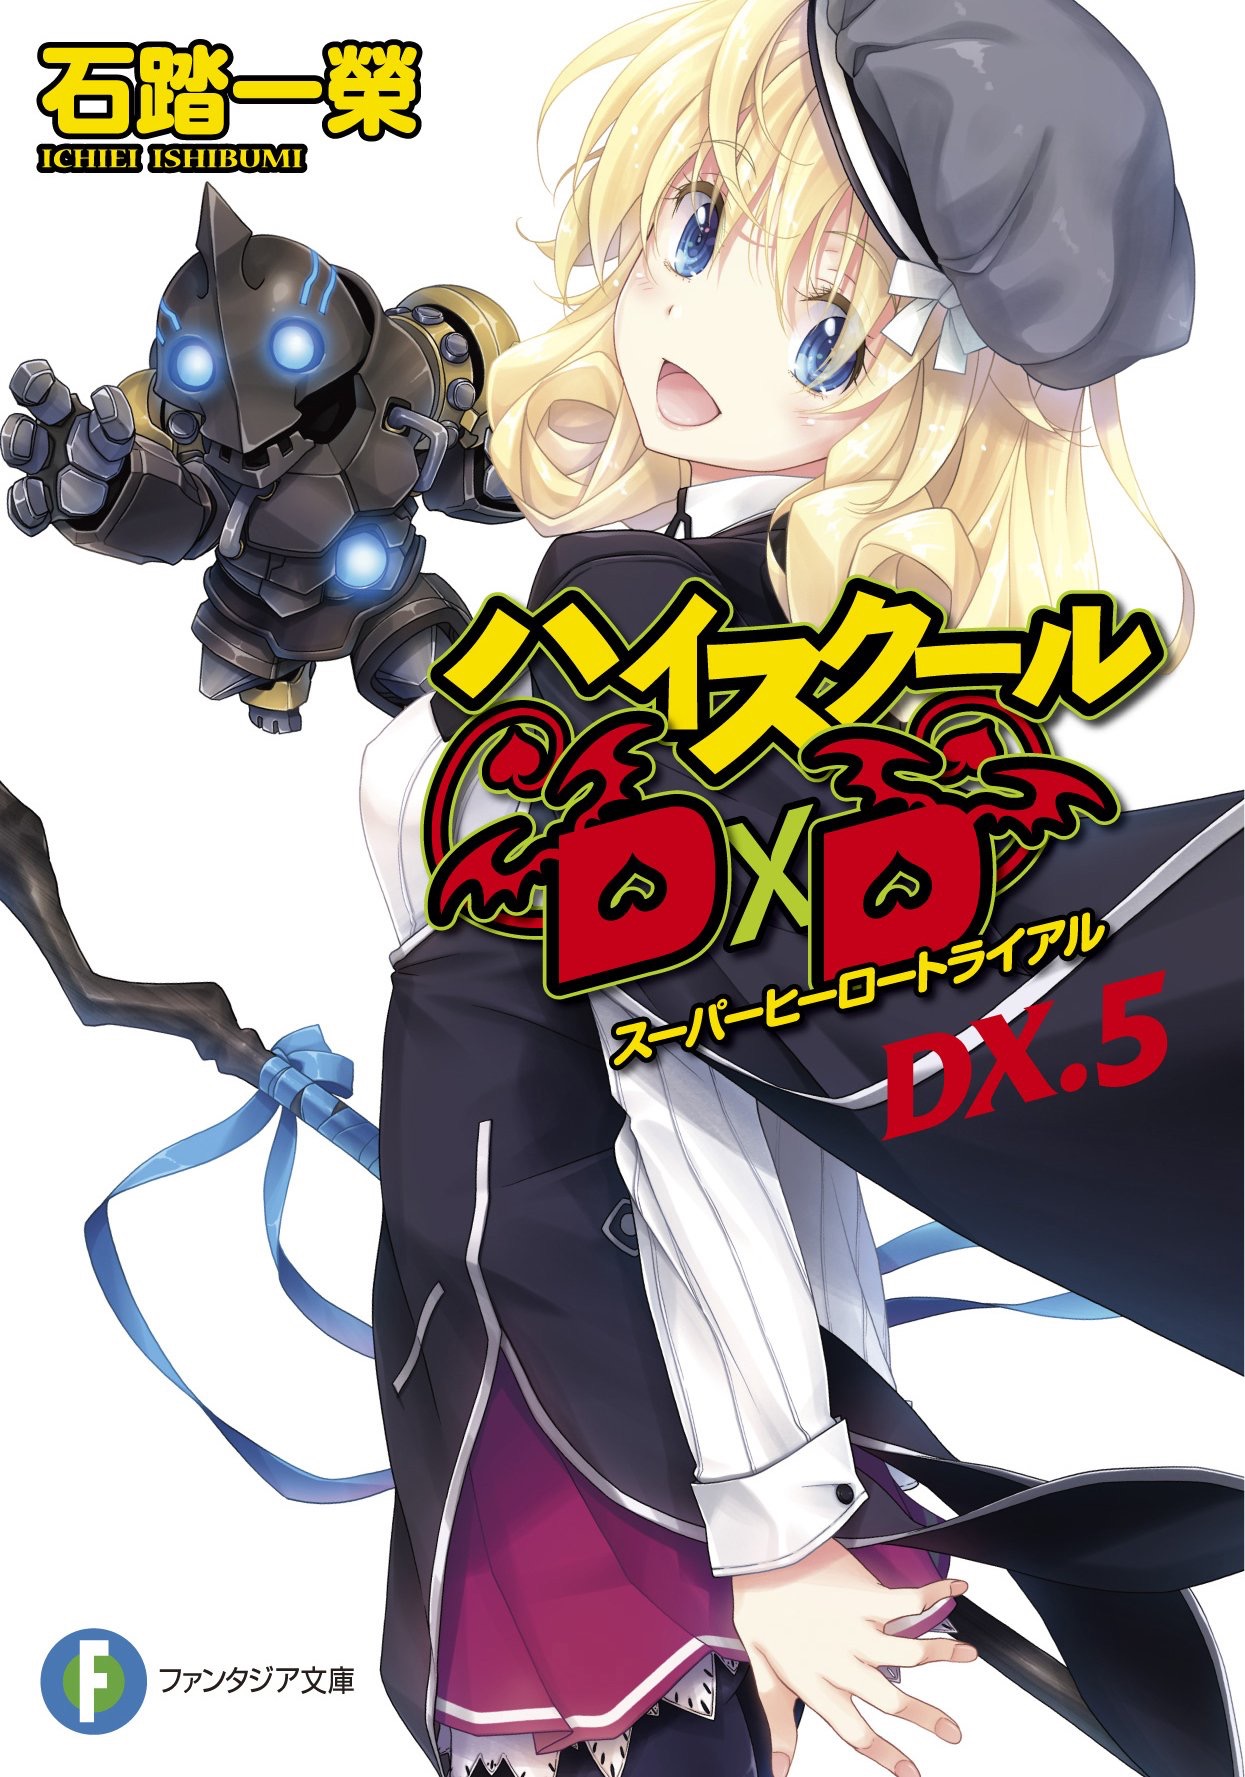 Ranking de vendas de Light Novel (Junho 17 - 23) - Highschool DxD